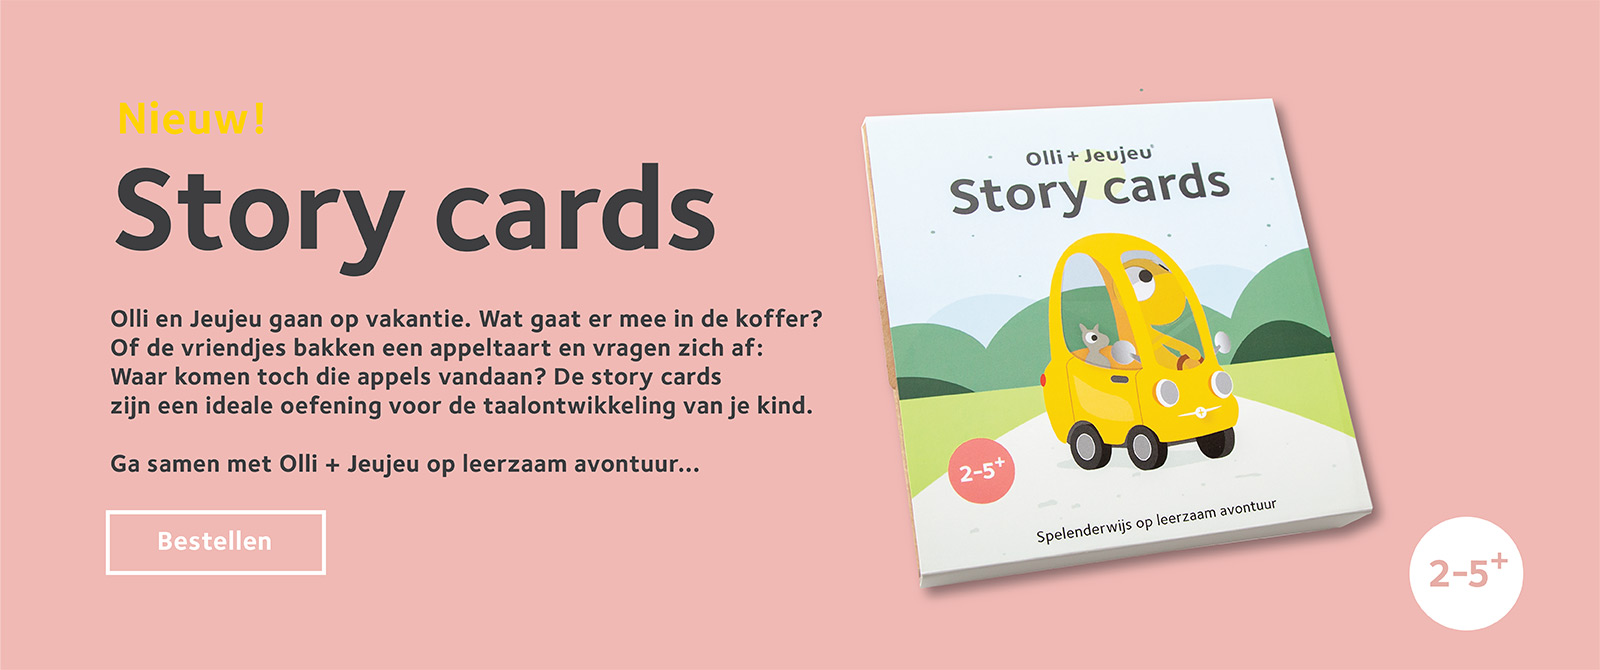 Olli + Jeujeu story cards